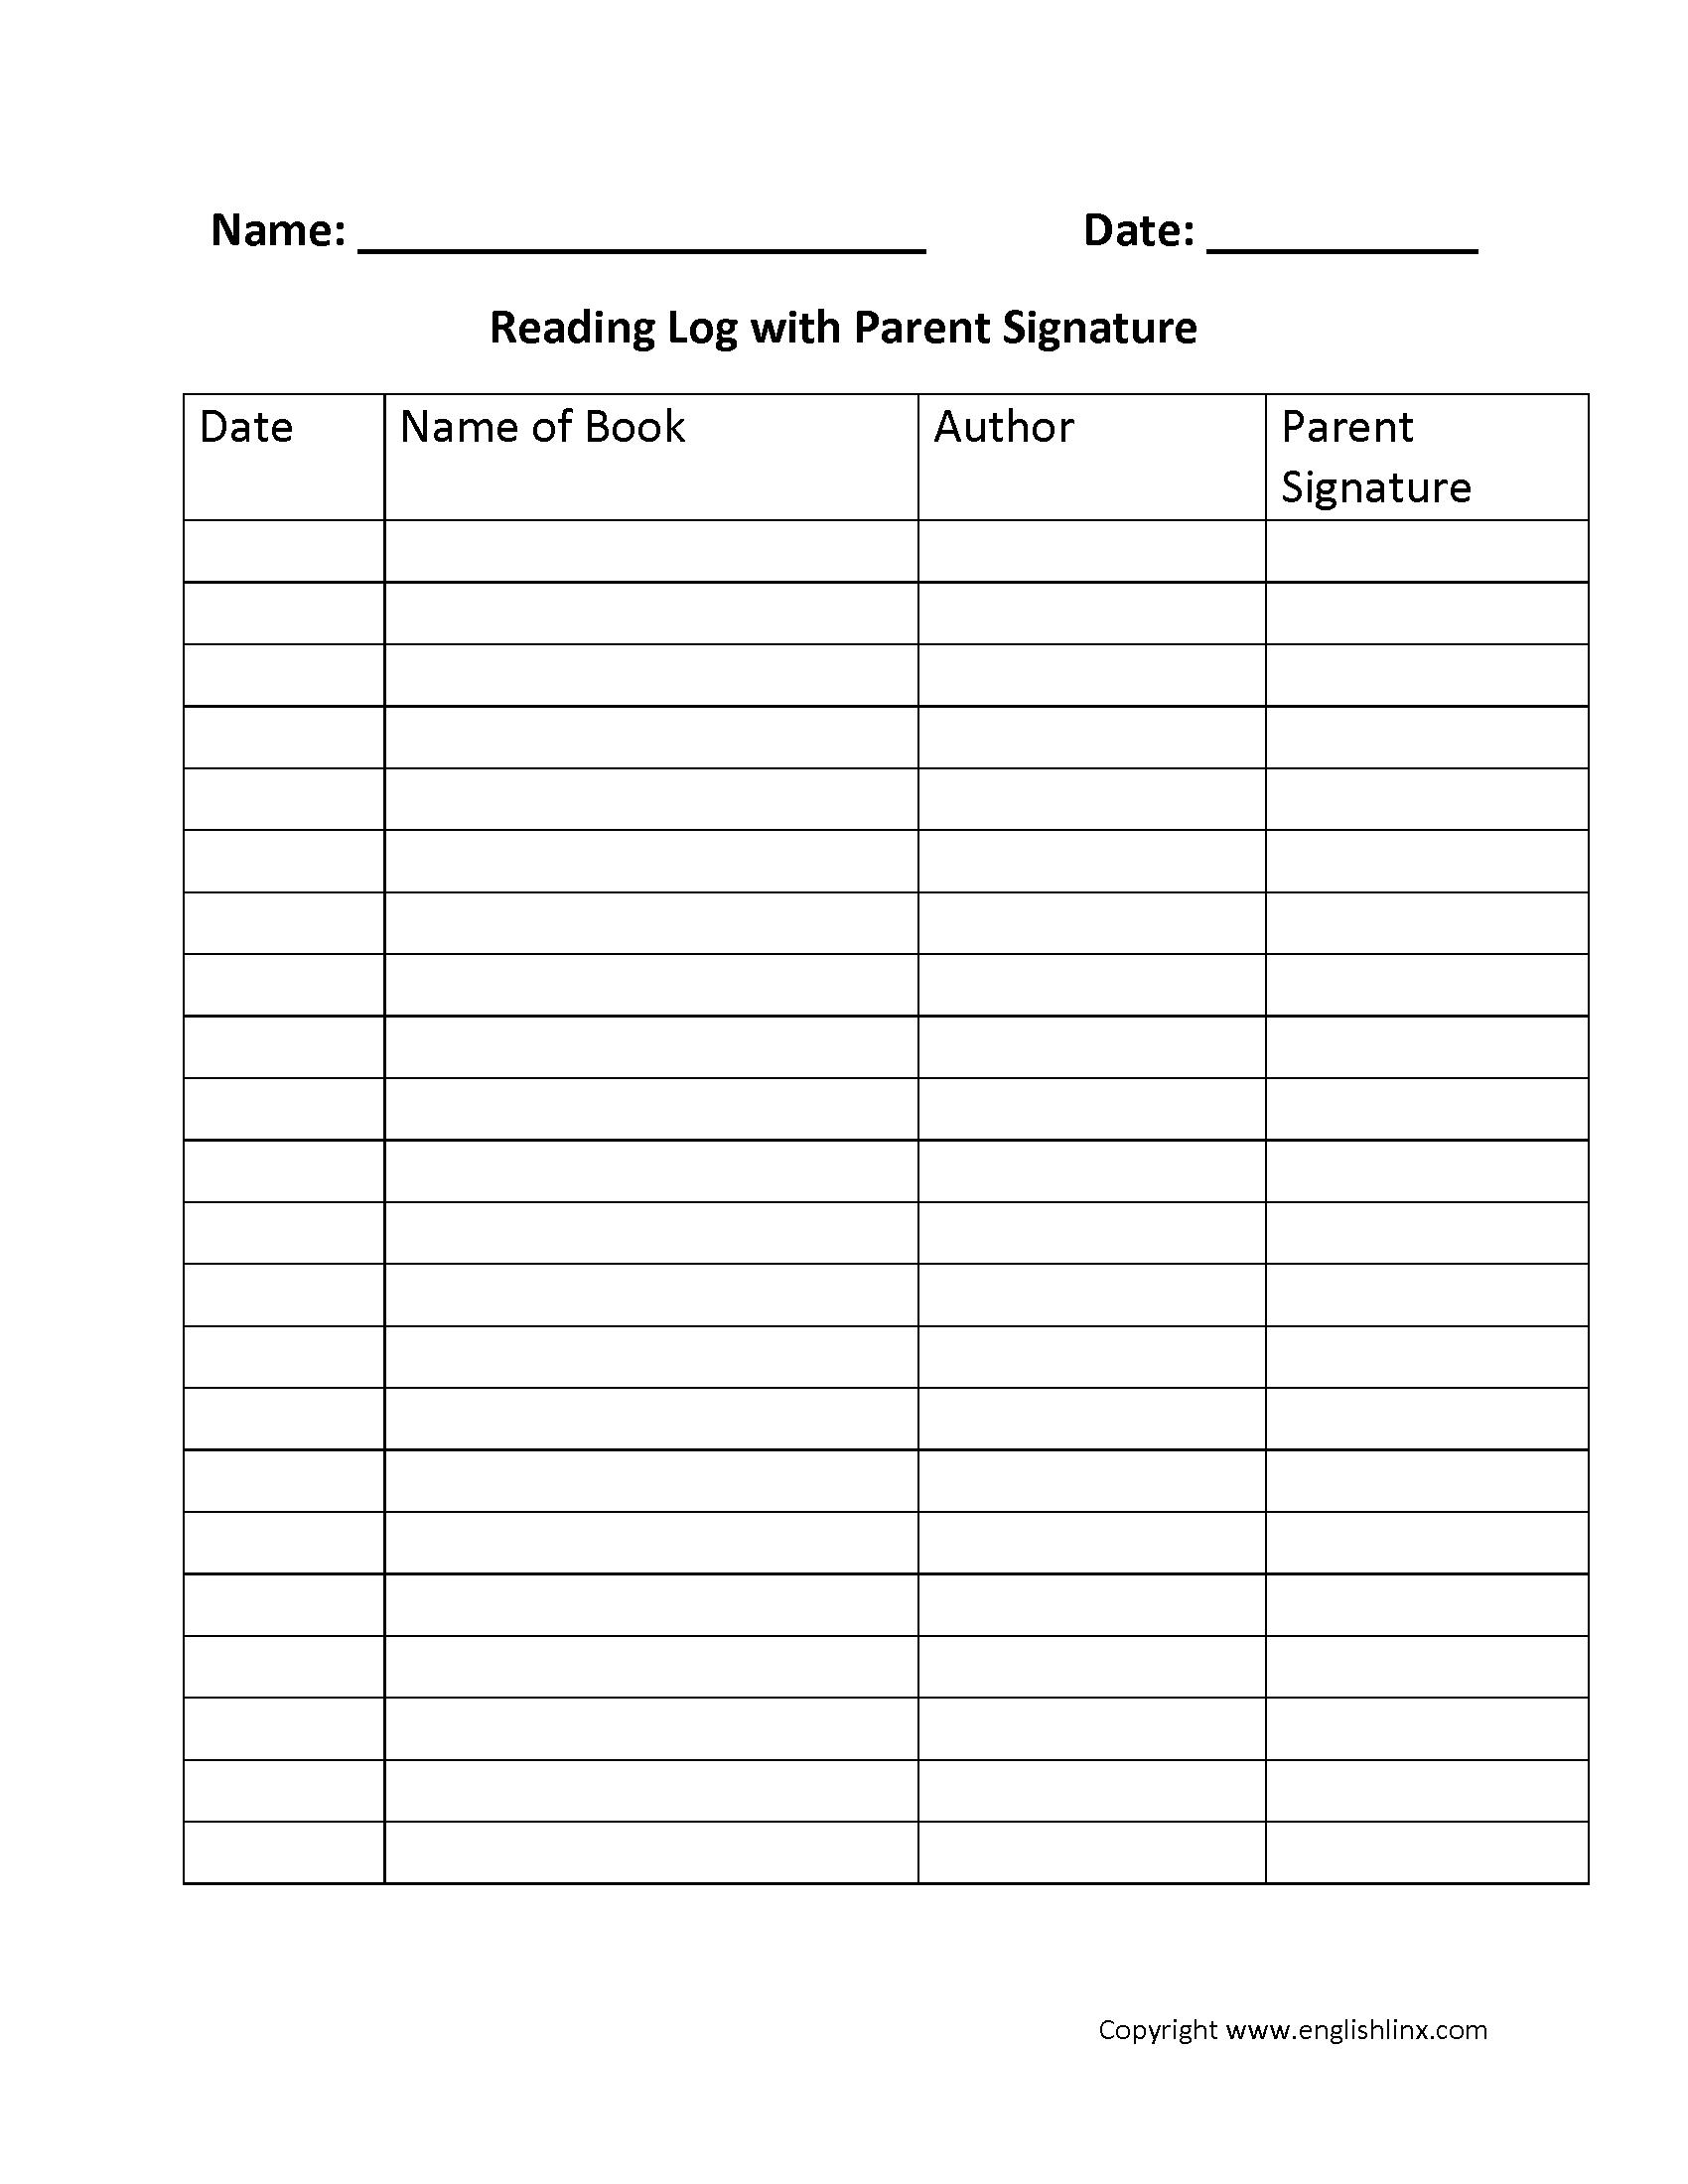 reading-logs-reading-log-parent-signature